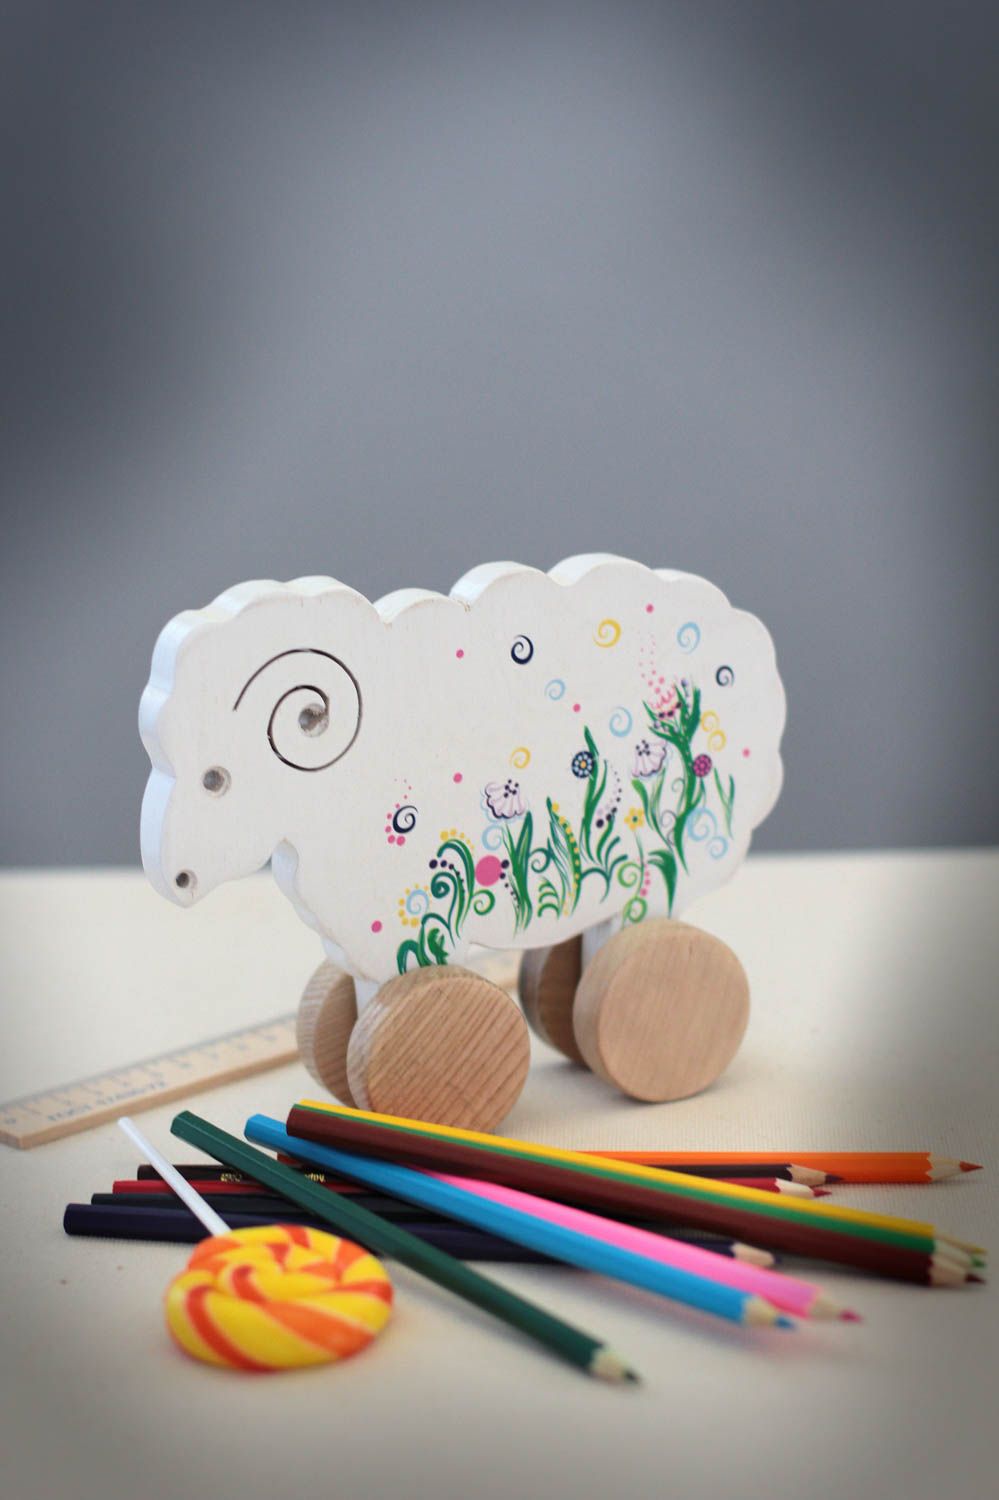 Juguete artesanal ovejita blanca juguete de madera regalo para niño con ruedas foto 1